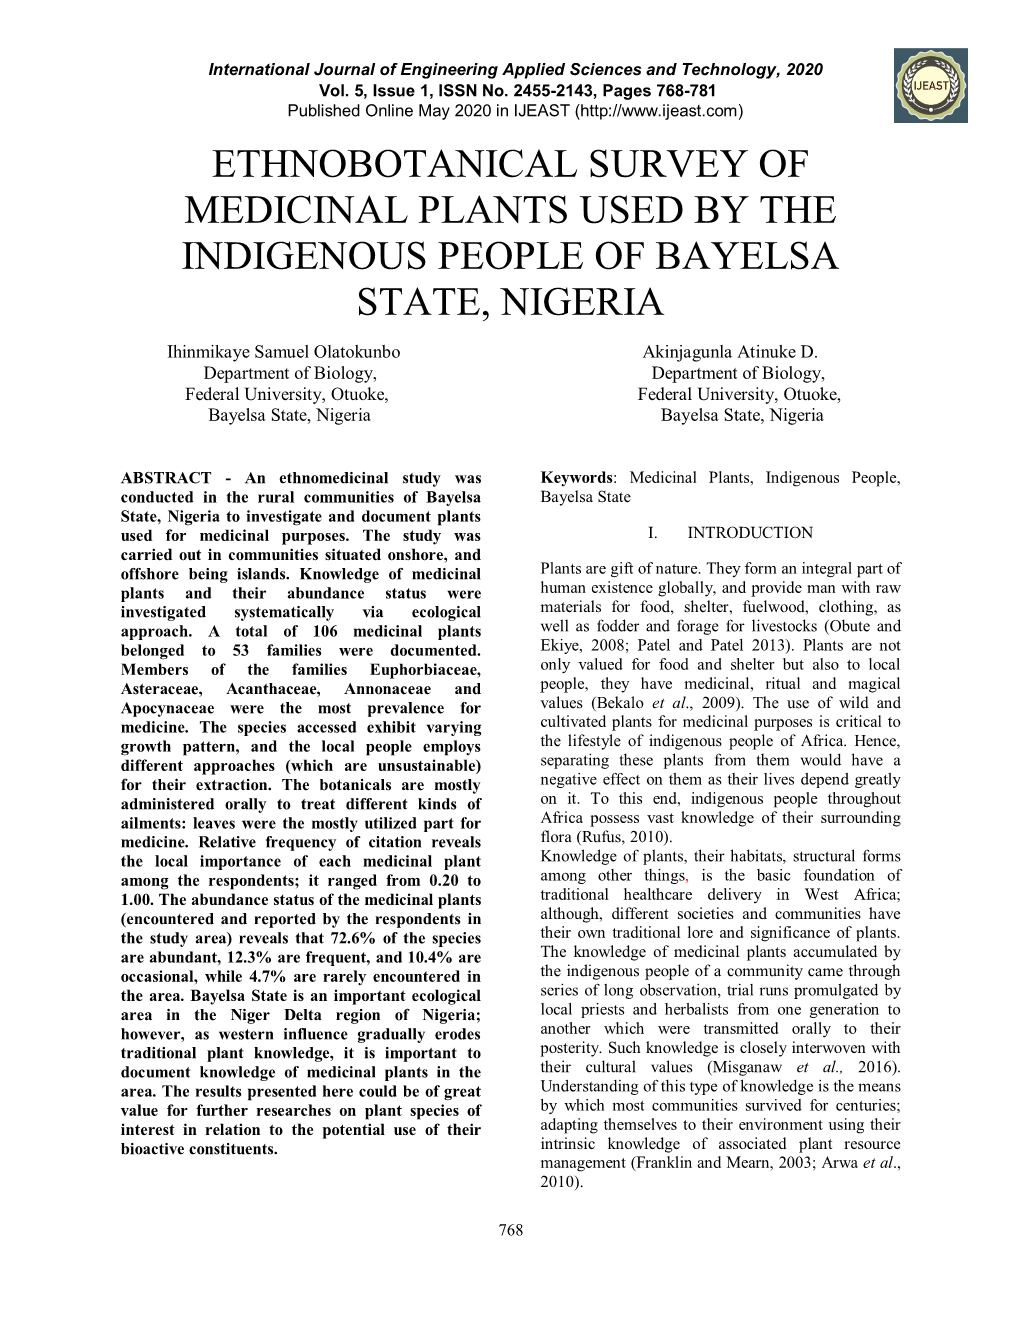 Ethnobotanical Survey of Medicinal Plants Used by the Indigenous People of Bayelsa State, Nigeria